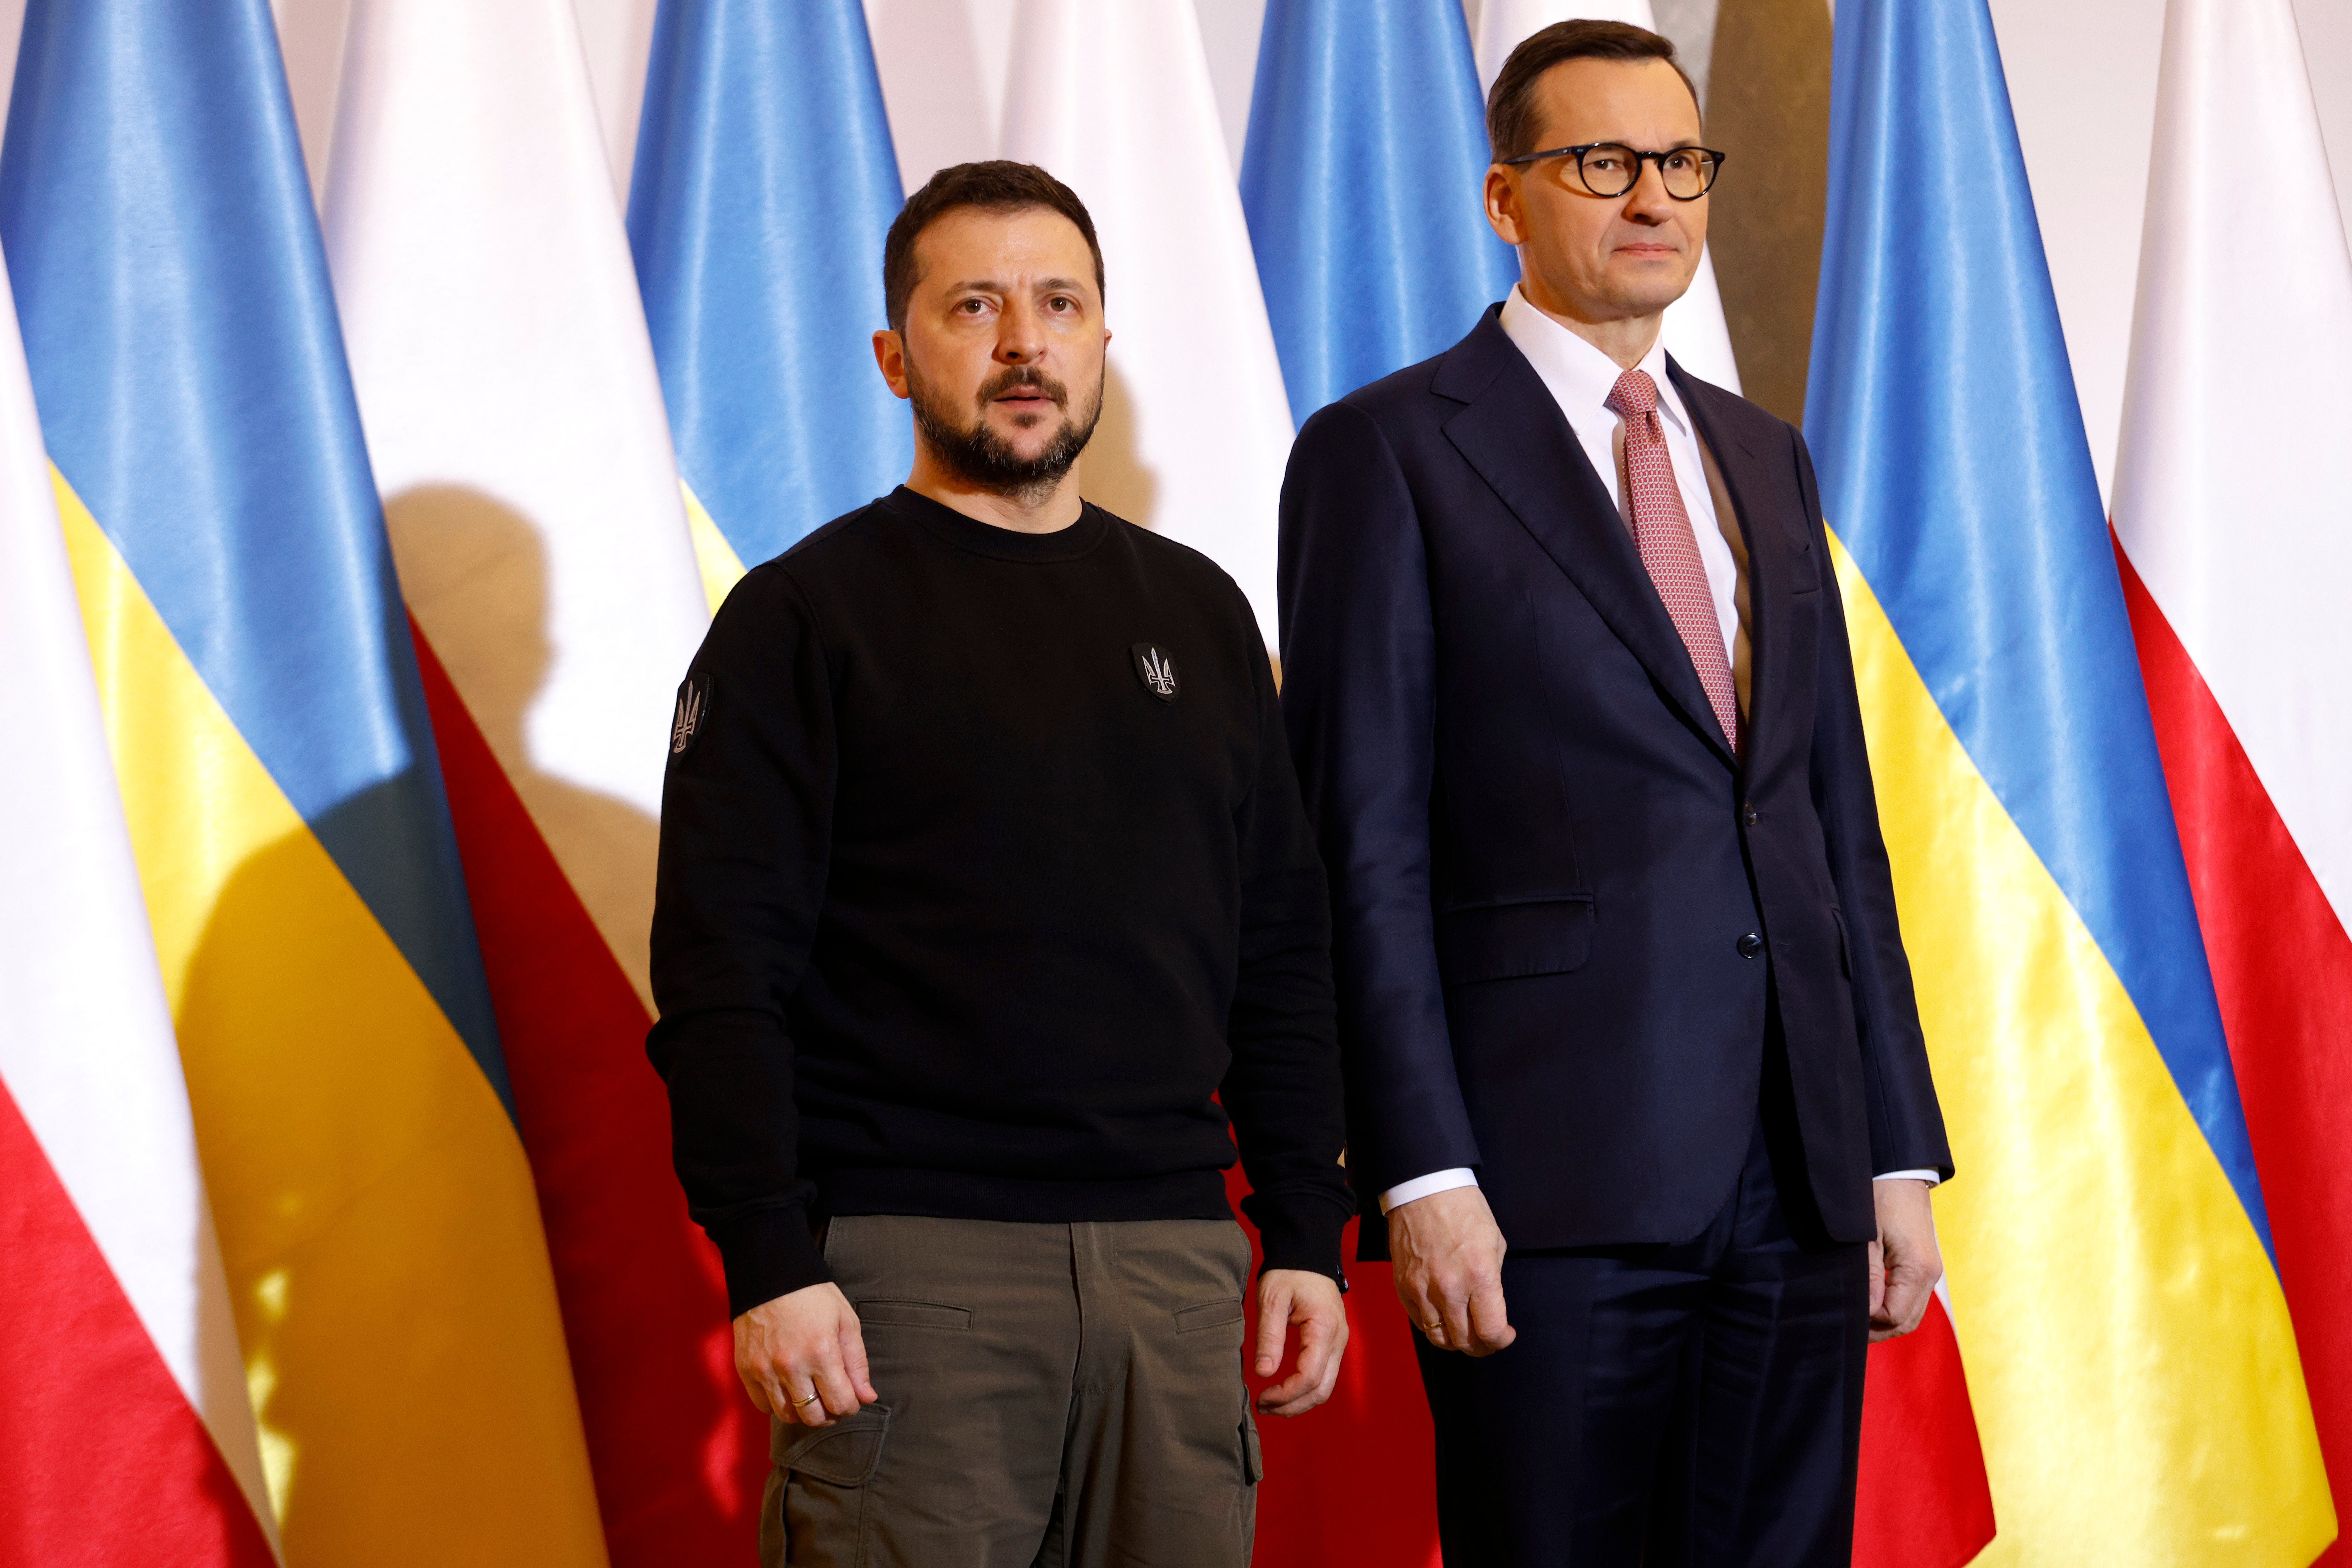 Poland's Mateusz Morawiecki, right, with Volodymyr Zelensky